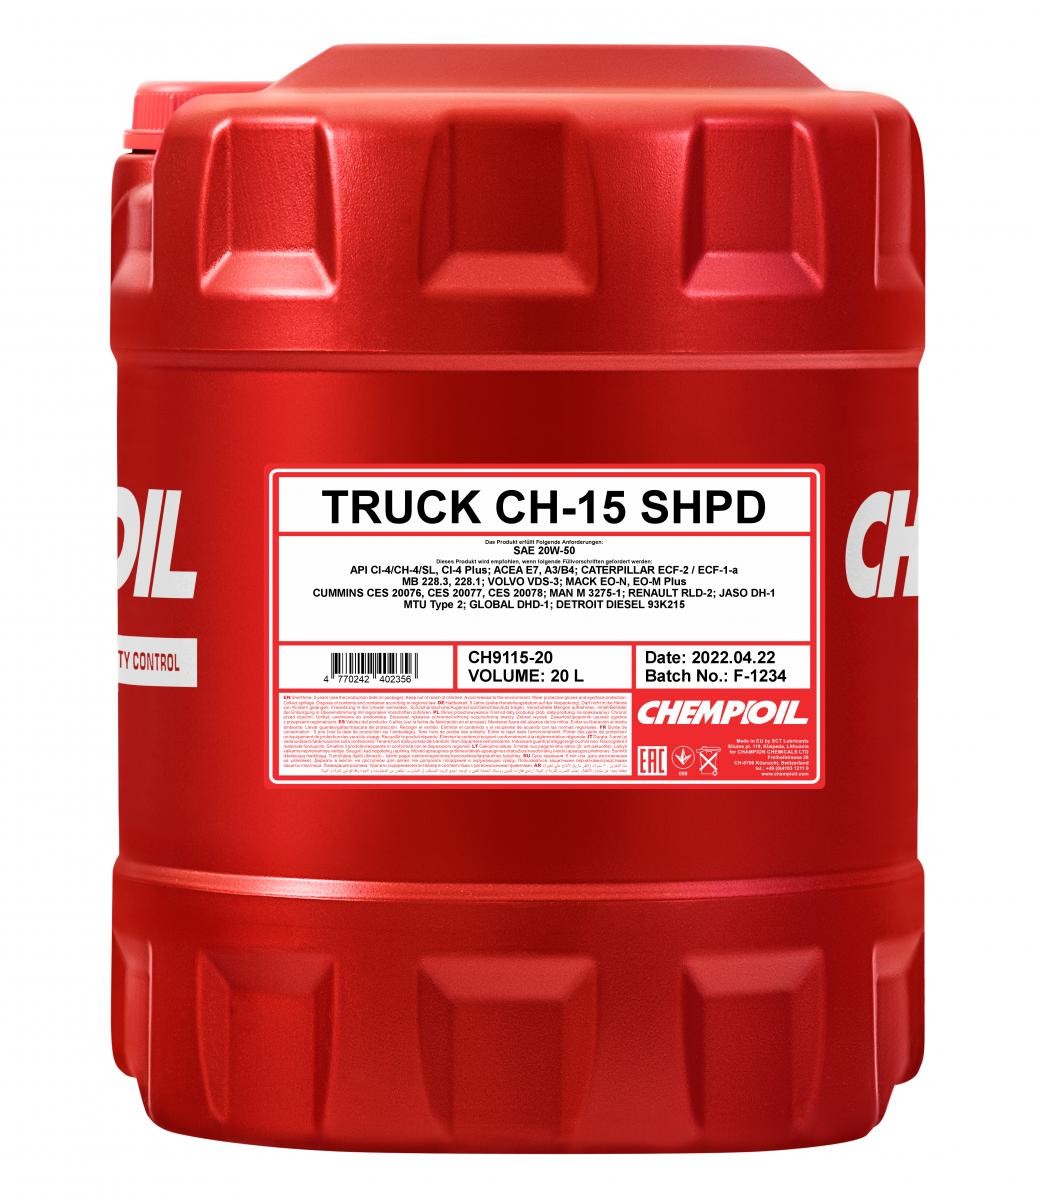 Buy Automobile oil CHEMPIOIL petrol CH9115-20 Truck, SHPD CH-15 20W-50, 20l